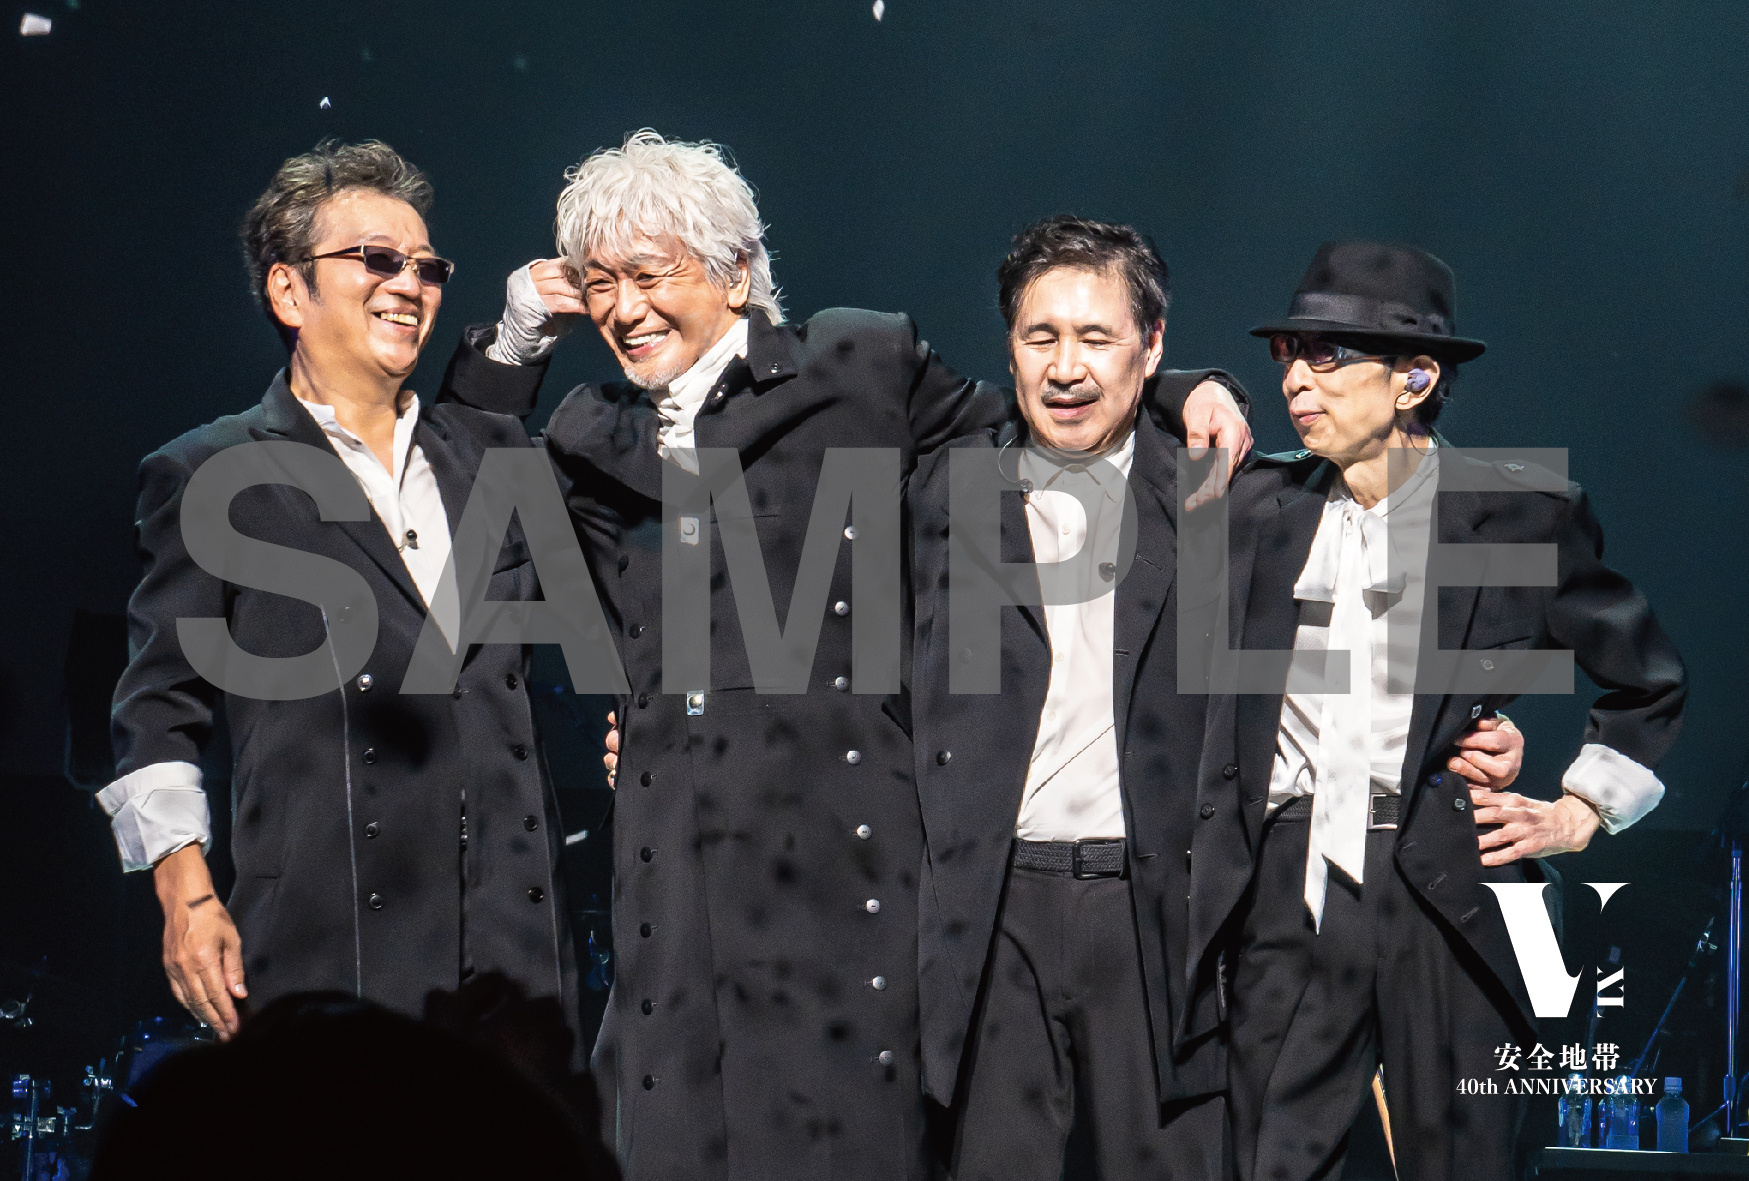 【LP】安全地帯40th ANNIVERSARY CONCERT "Just Keep Going!" Tokyo Garden Theater